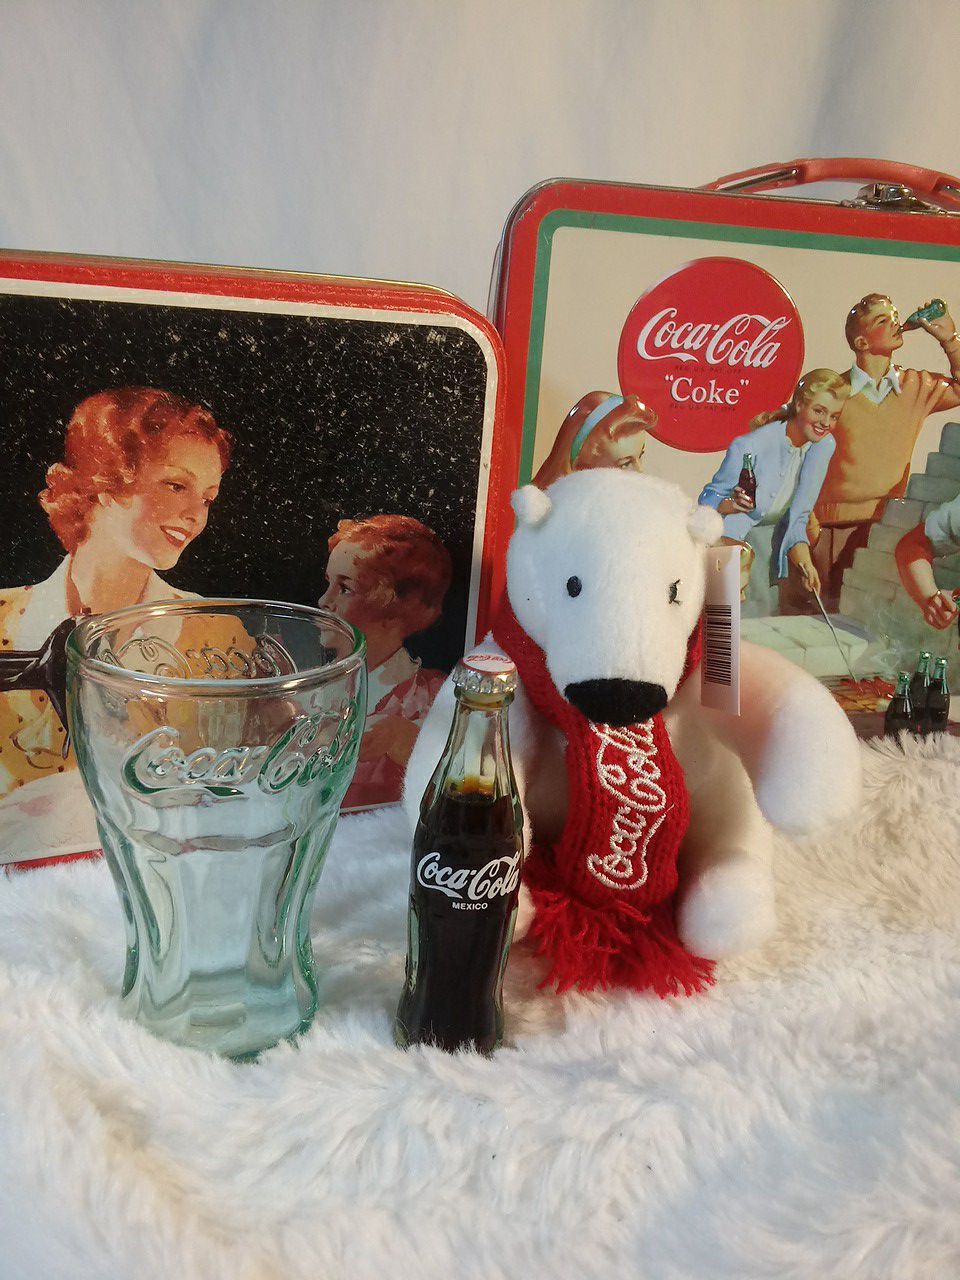 Coca cola package